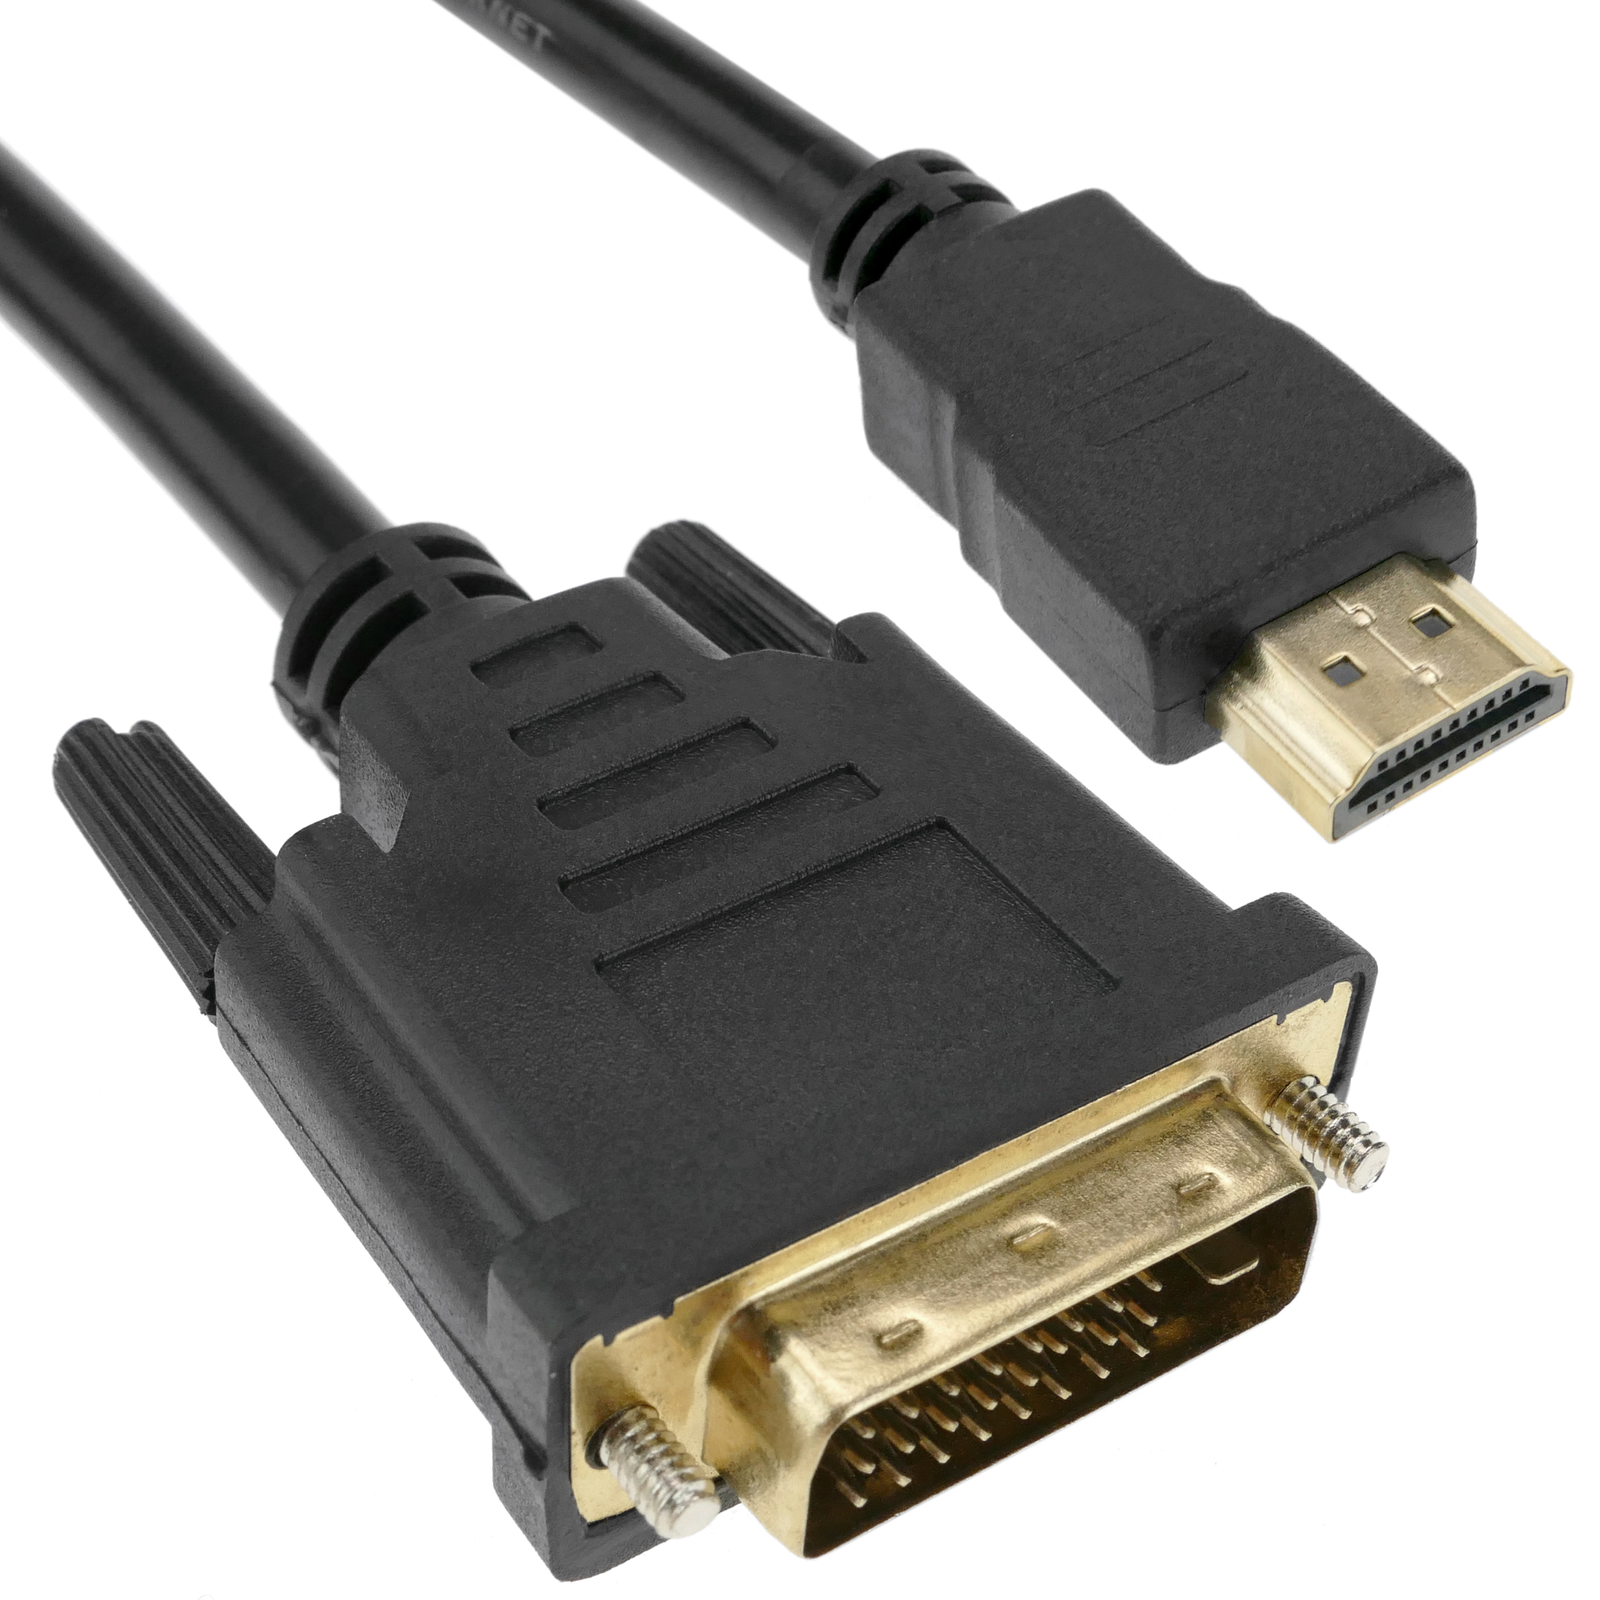 DVI-I Cable Male Dual Link DVI I 29 PIN 28+1 Digital & Analogue 2m 3m 5m Lengths 